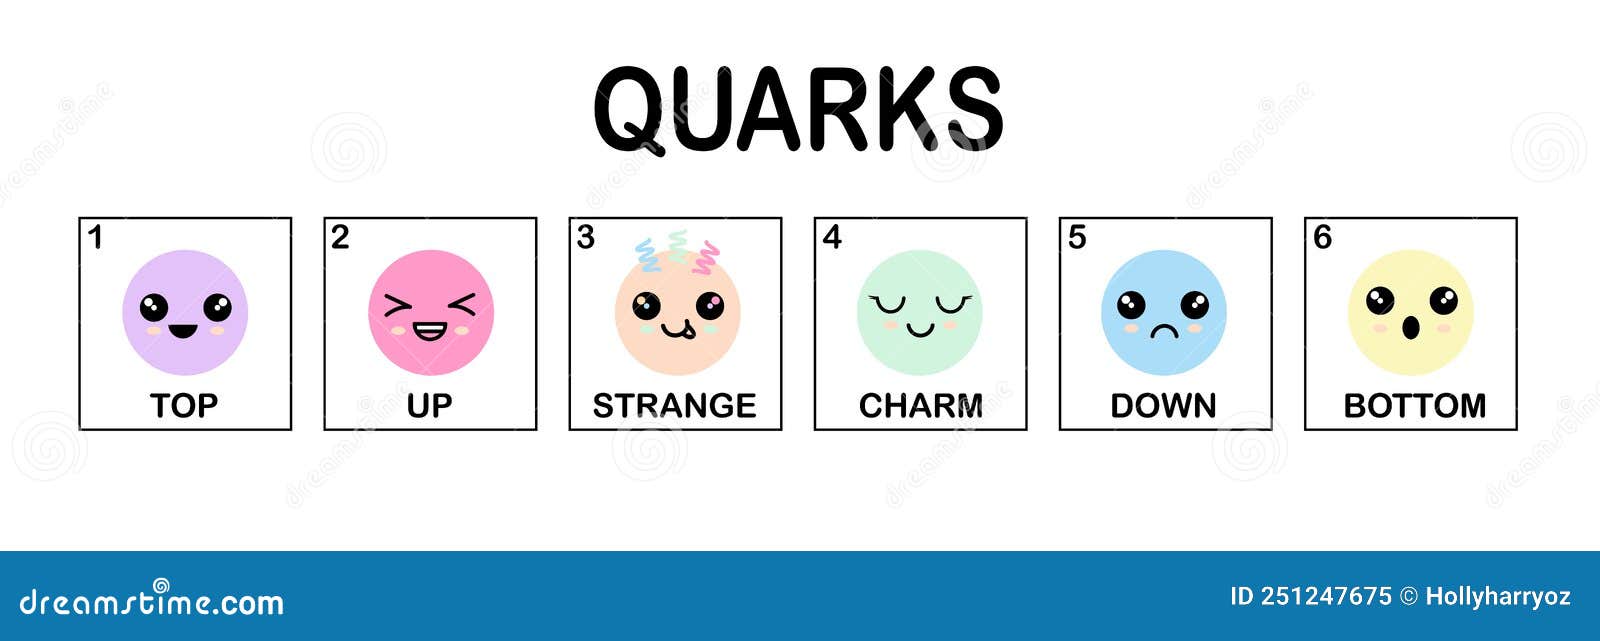 quarks, strange, charm, up, down, top, bottom, quark types found by hadron collider at cern